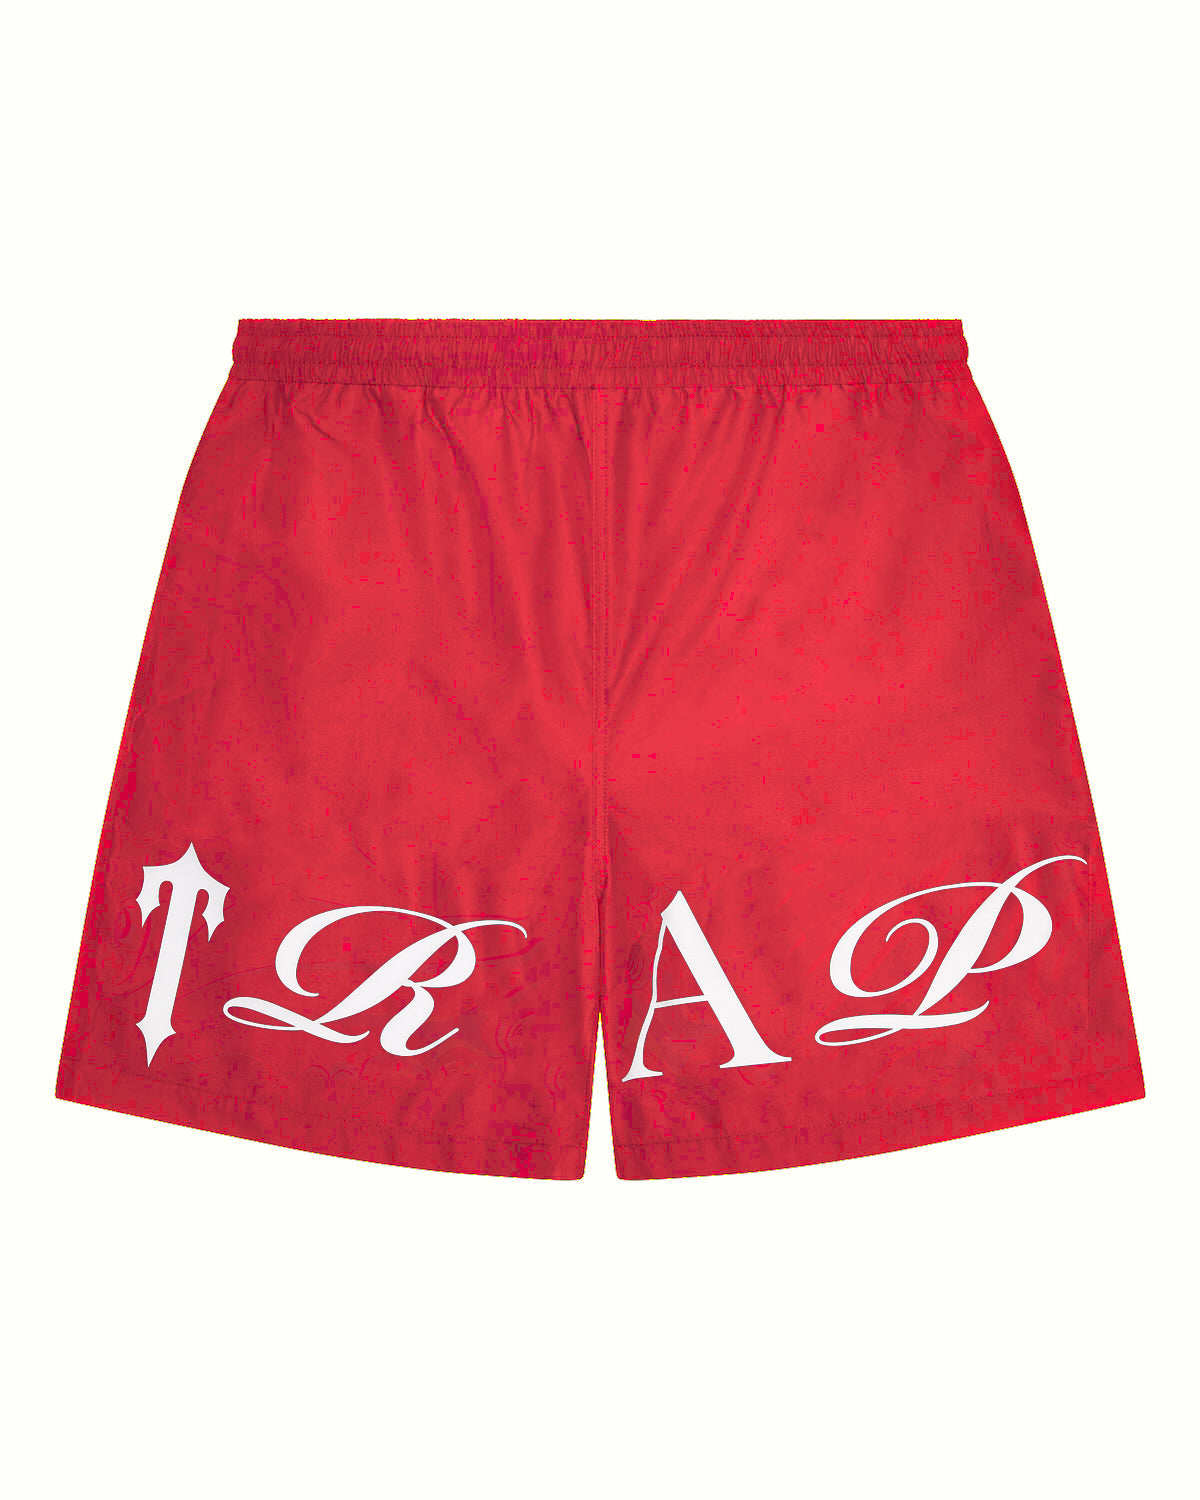 Script Shell Shorts - Red/White